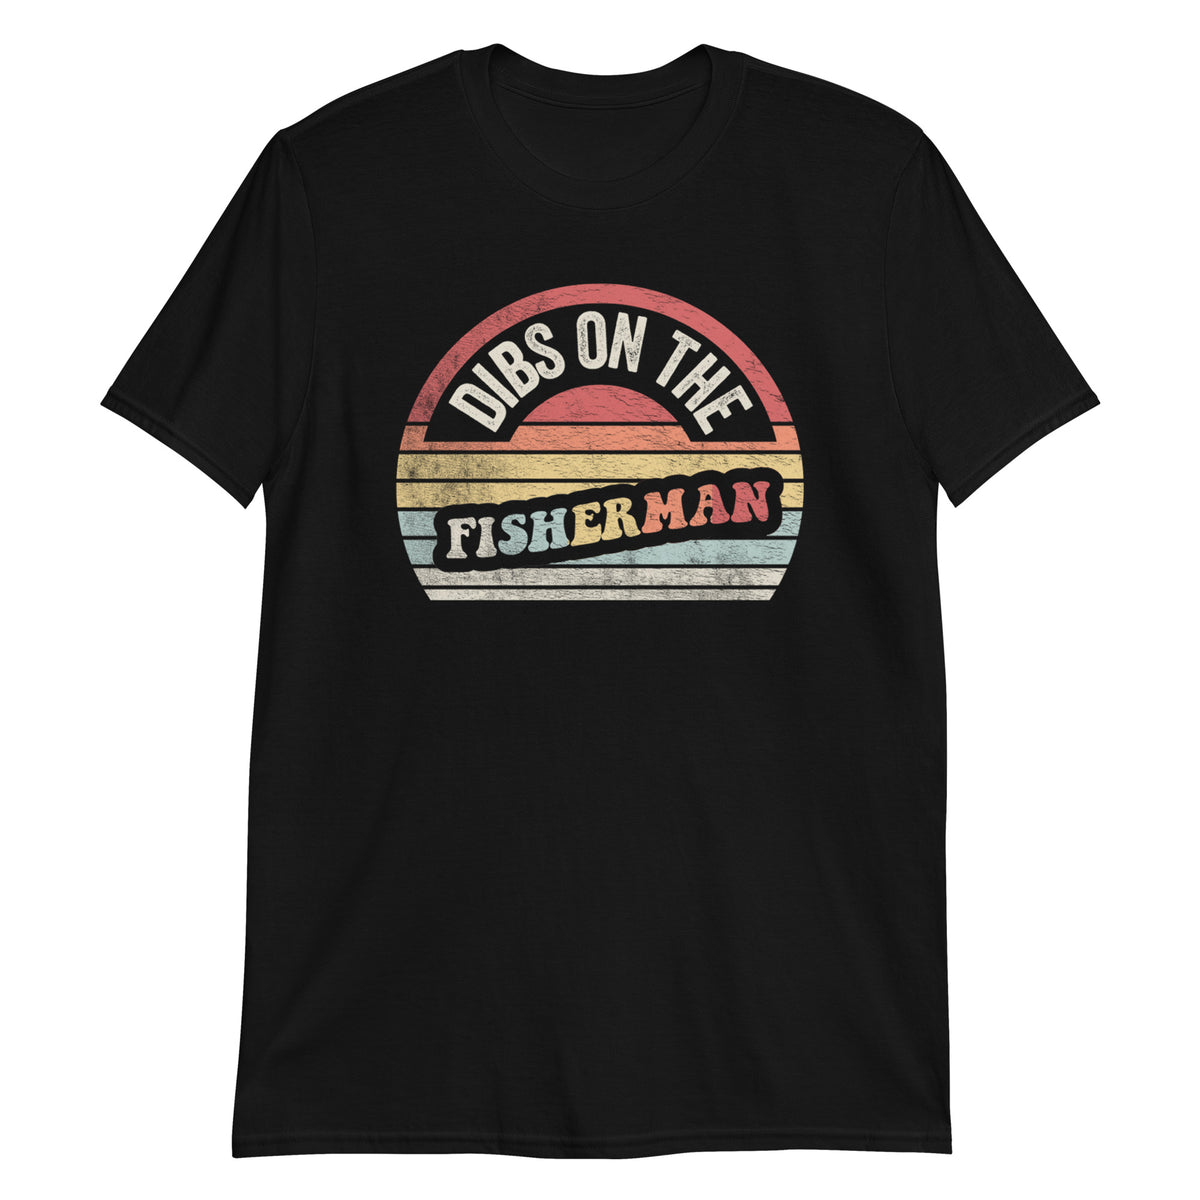 Dibs on The Fisherman T-Shirt